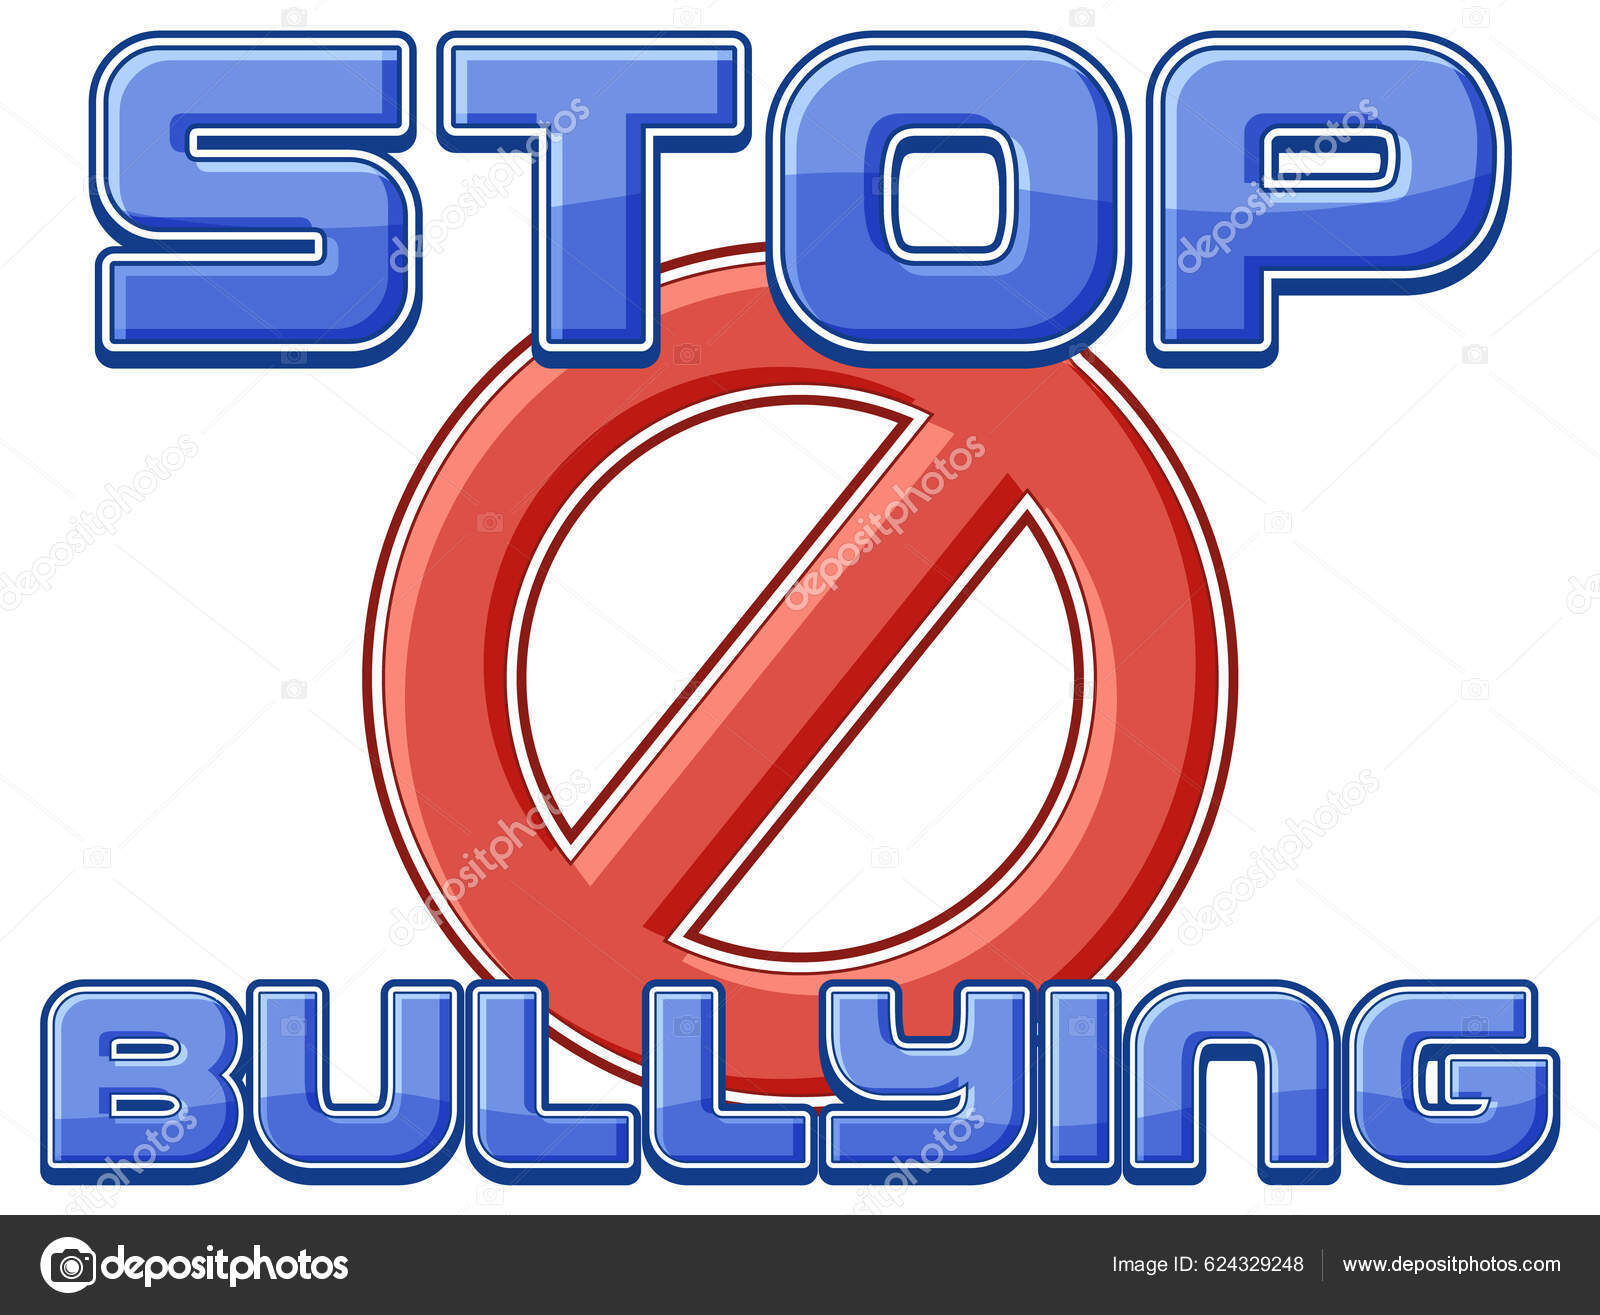 stop bullying logos